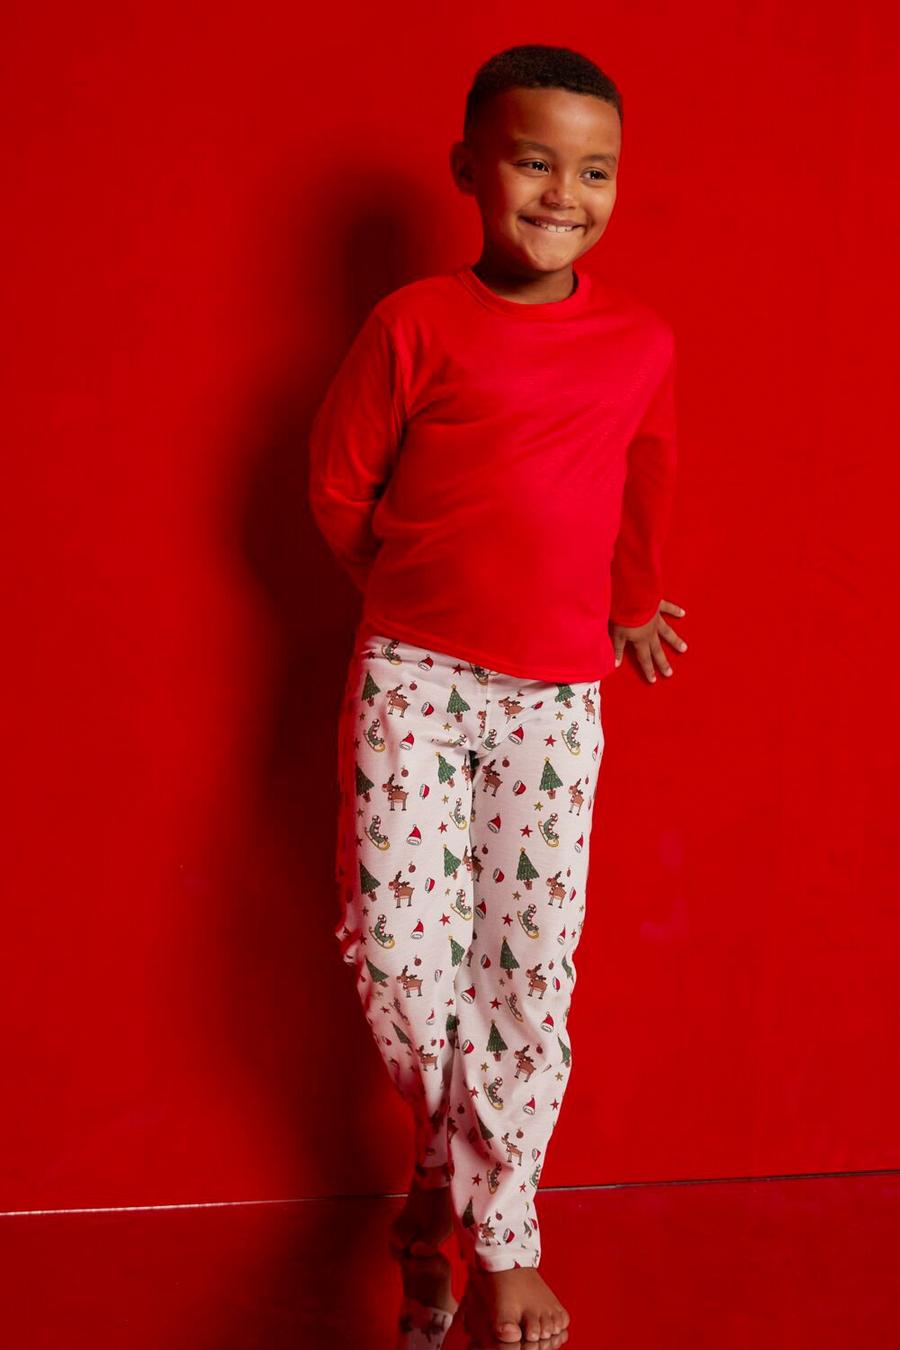 Mini Me - Pijama con estampado de gorros de Papá Noel, Red rojo